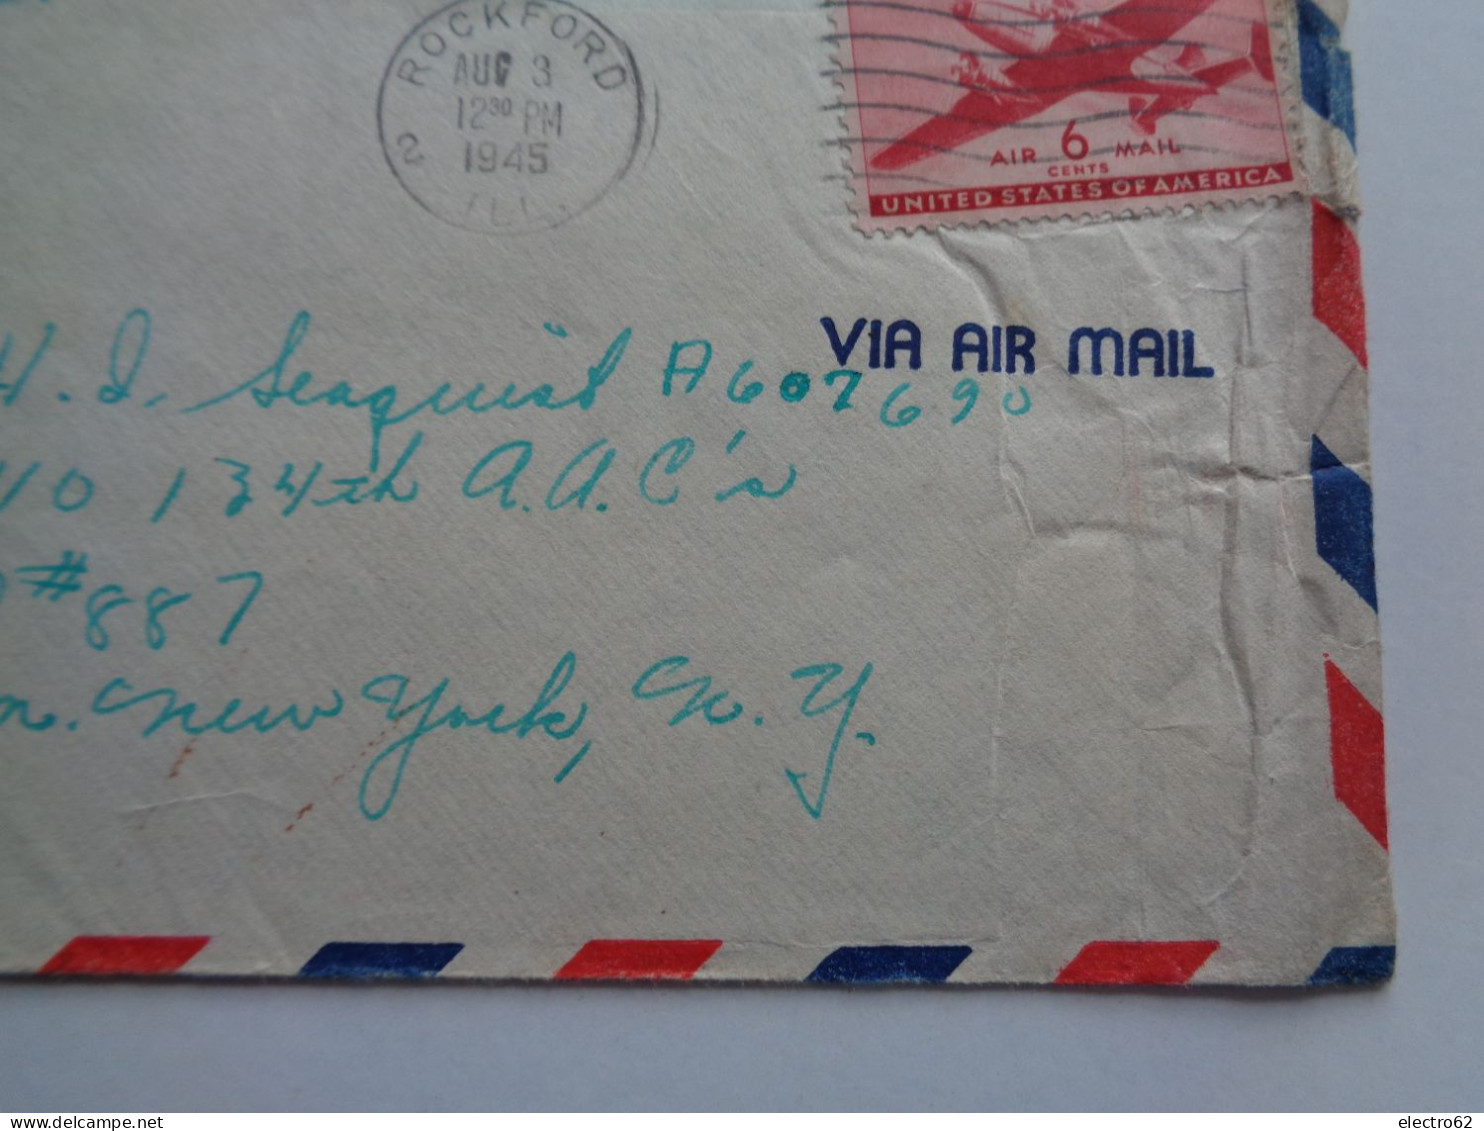 Etats-Unis enveloppes 1945 avion aigle eagle plane planes United States